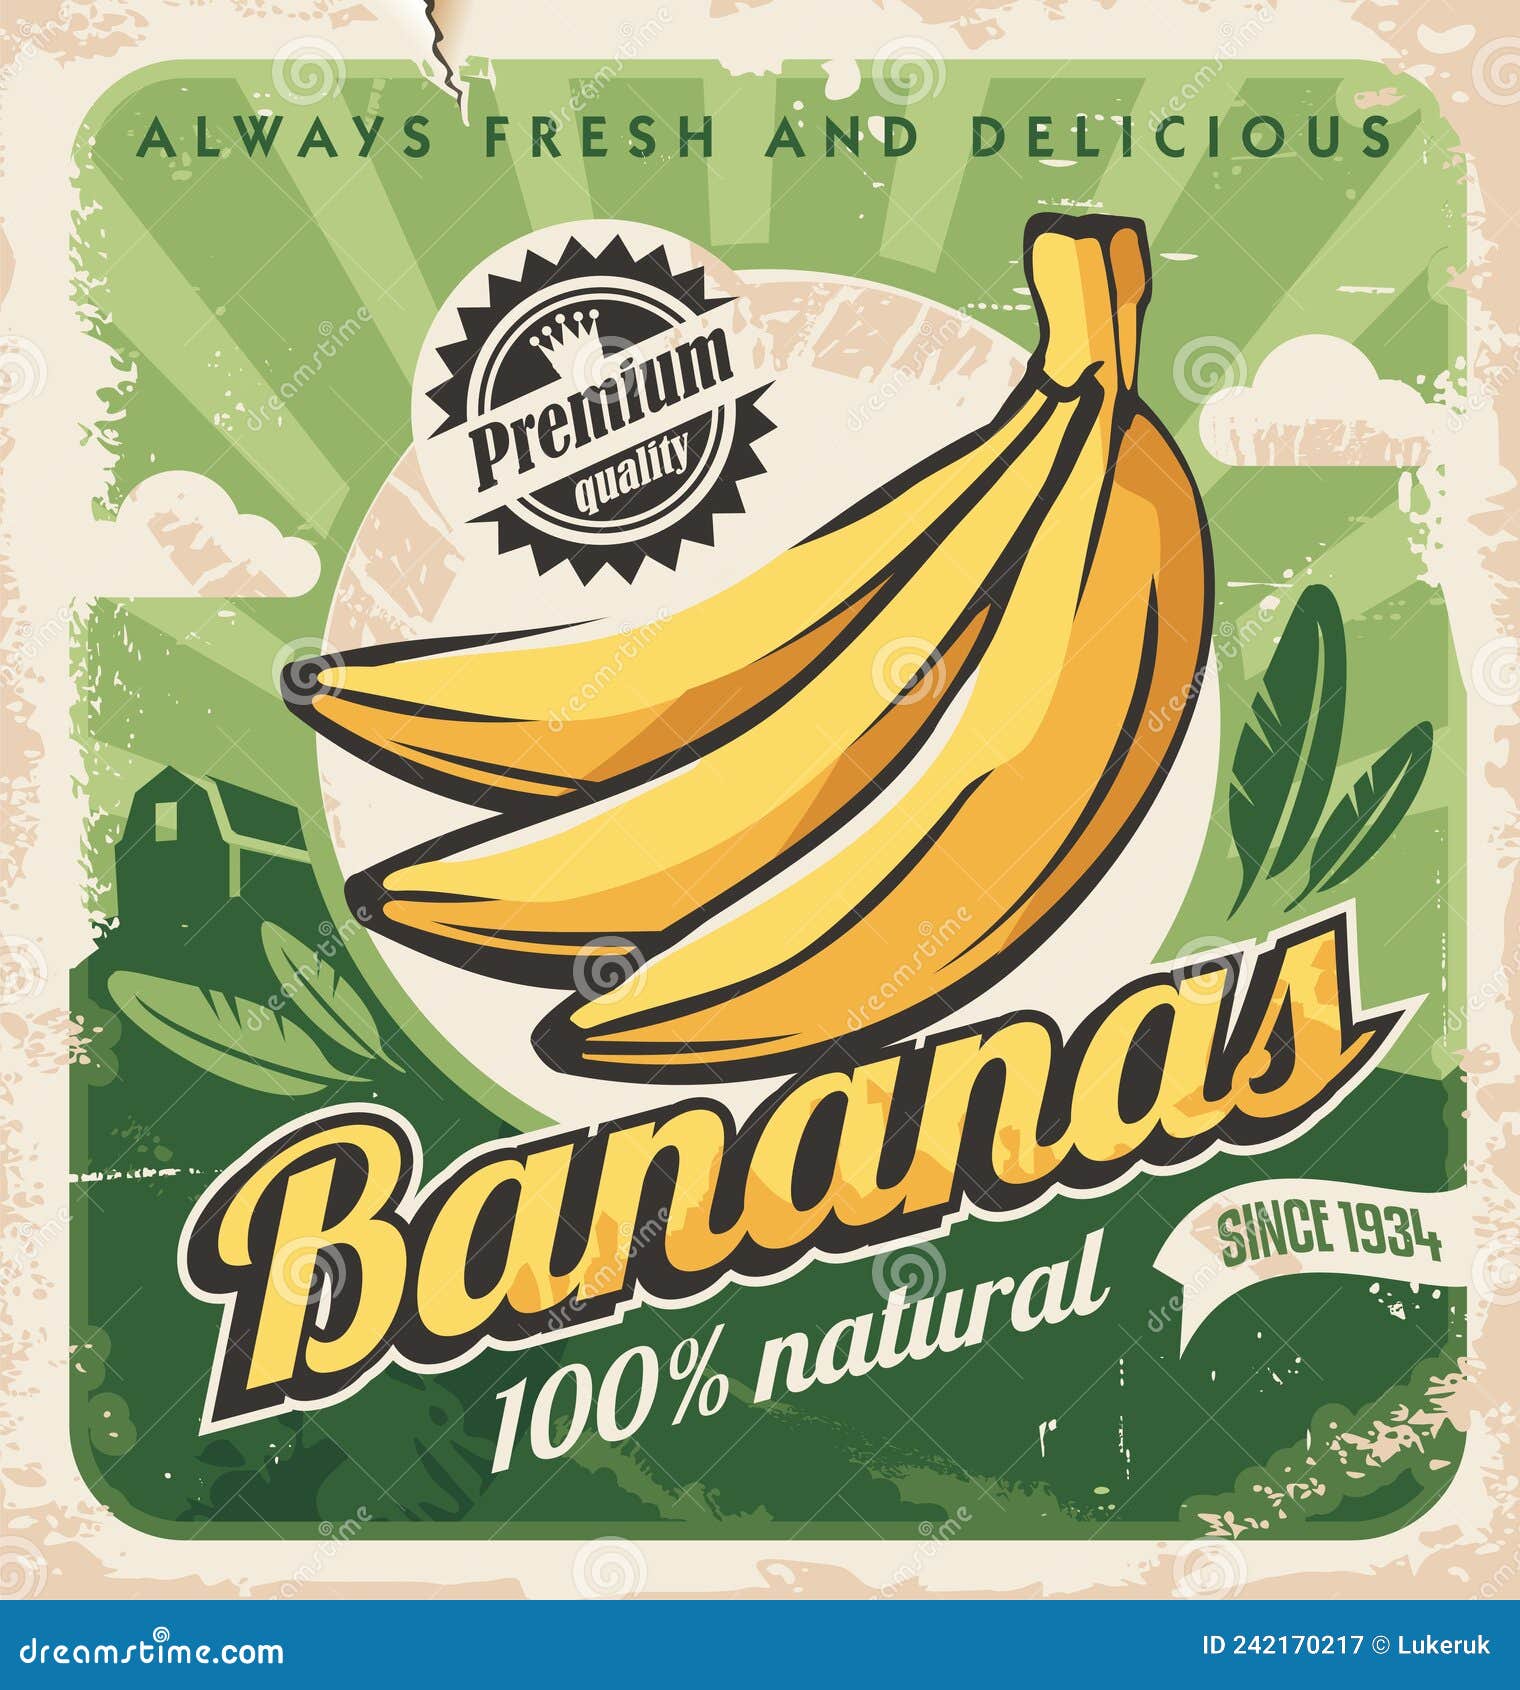 https://thumbs.dreamstime.com/z/banana-plantation-retro-poster-design-old-paper-texture-vintage-advertisement-organic-farm-vector-fruits-illustration-242170217.jpg